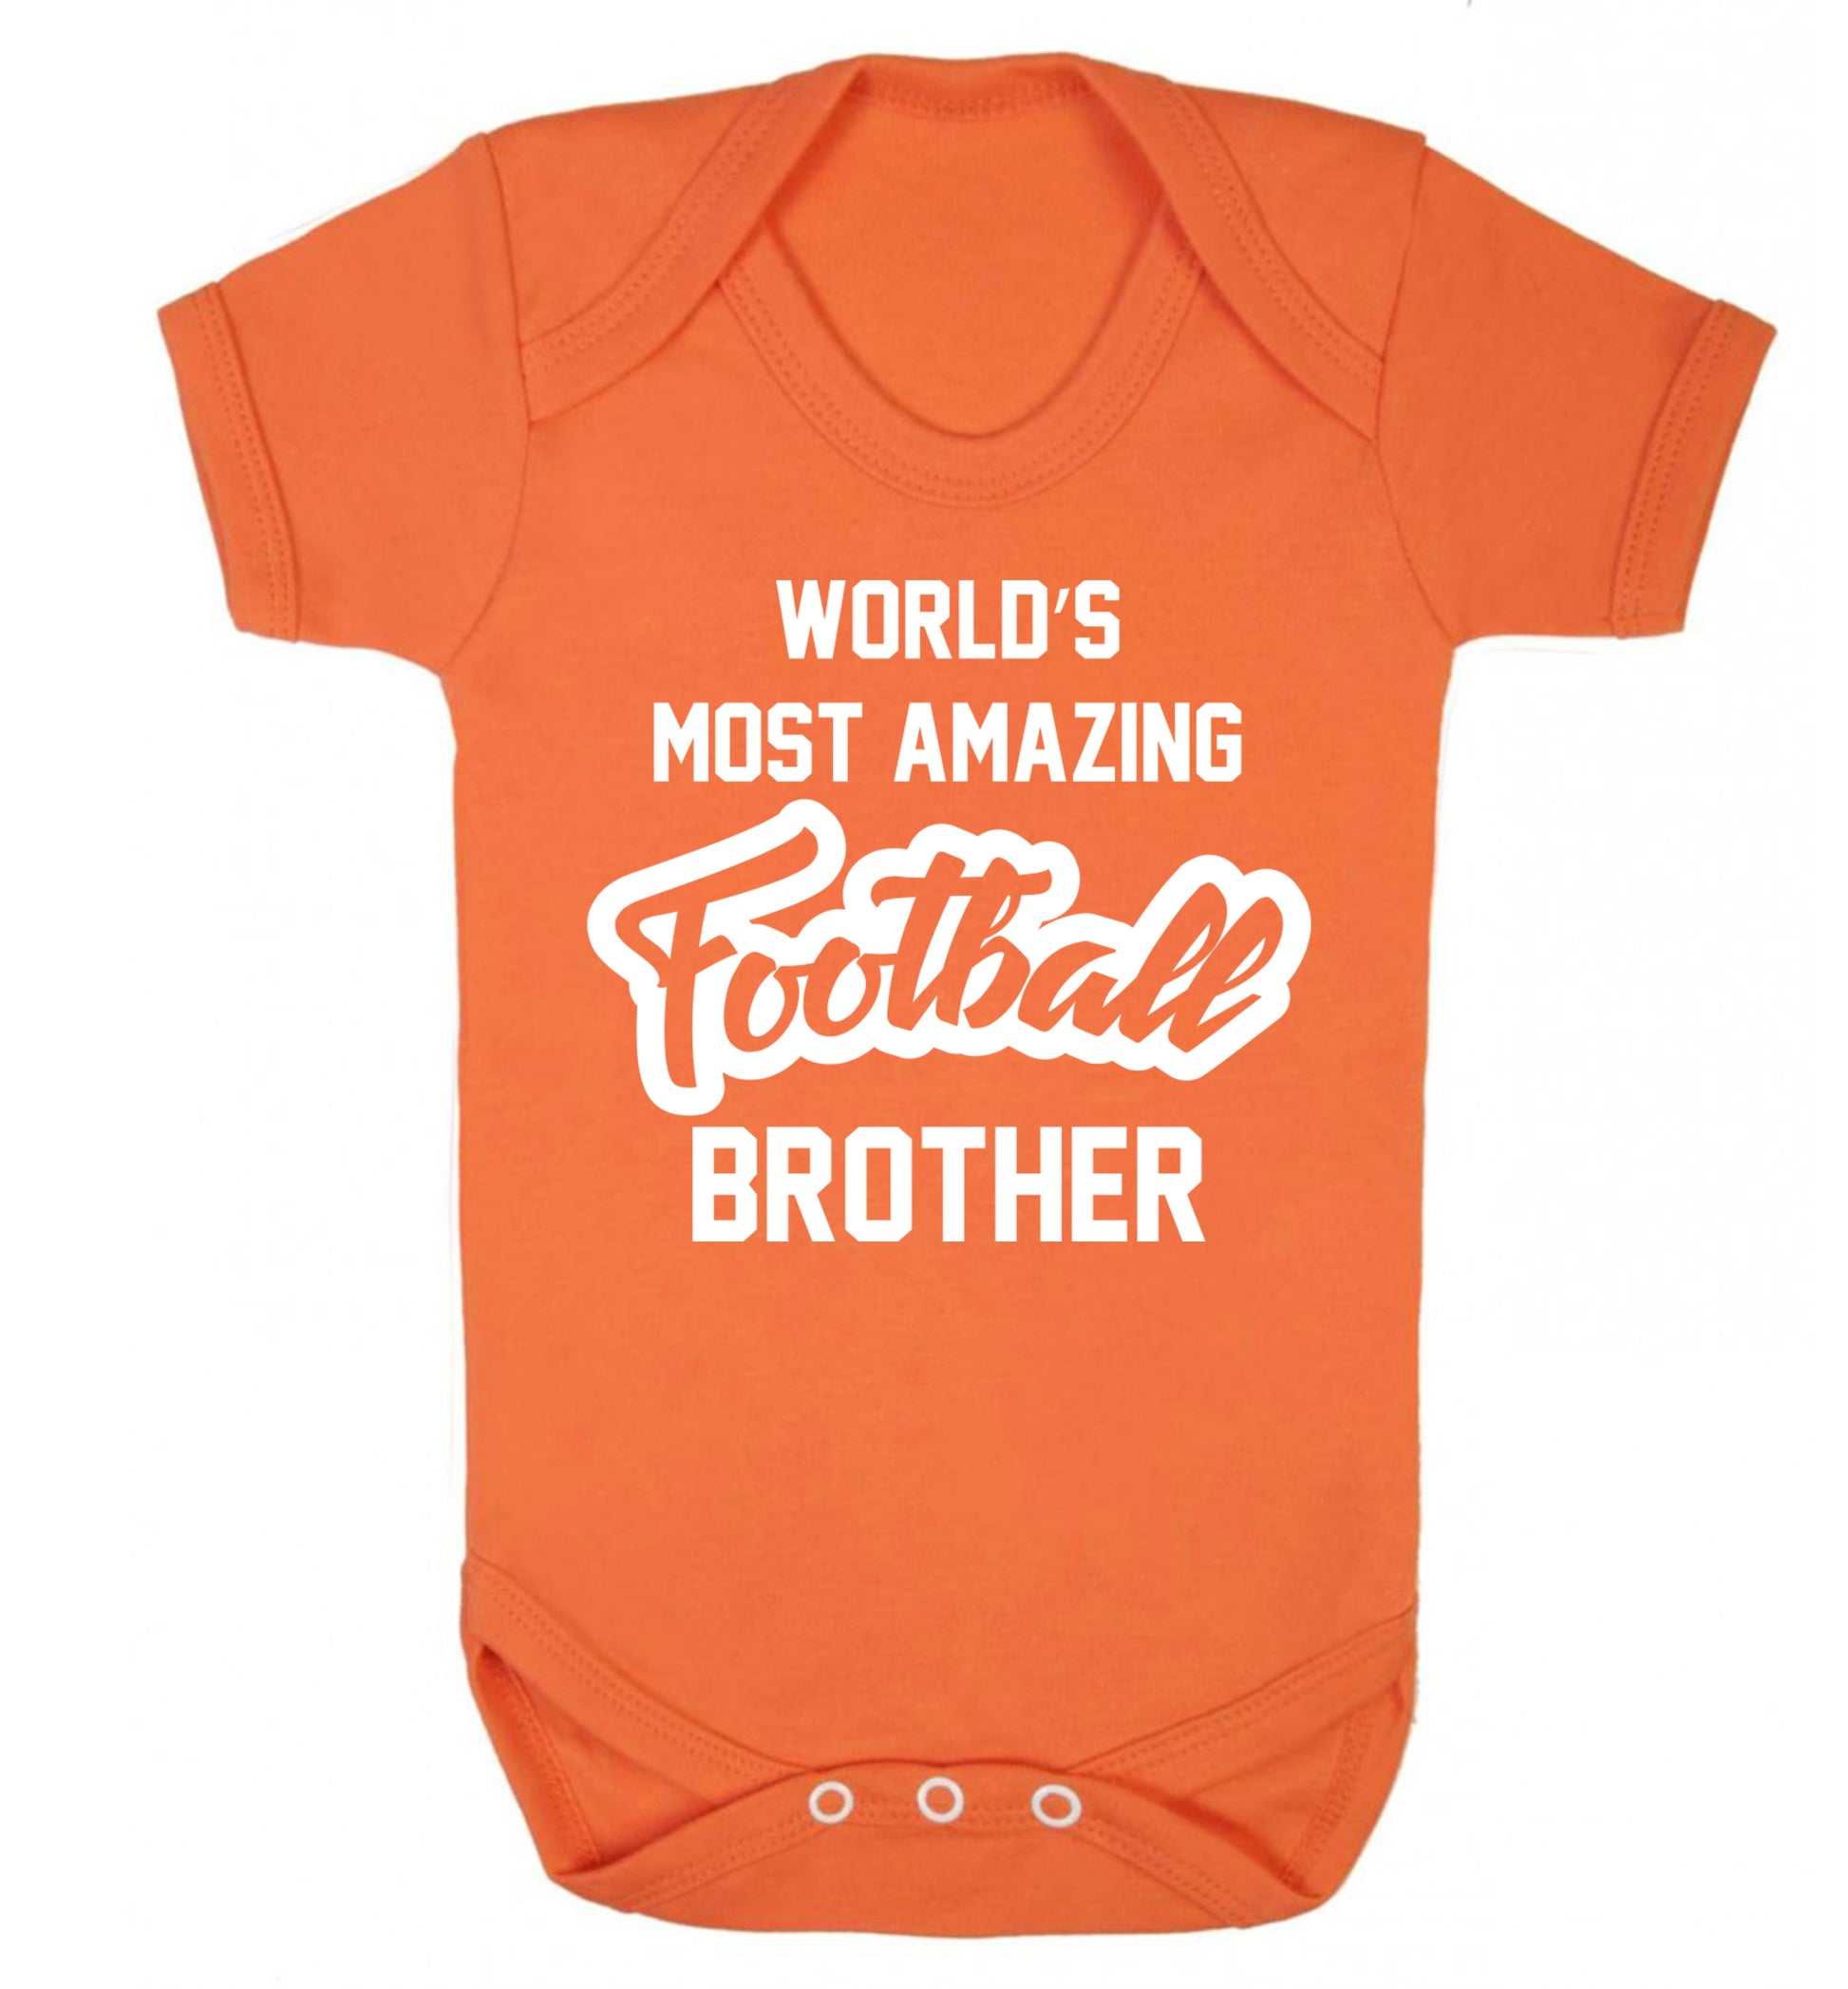 Worlds most amazing football brother Baby Vest orange 18-24 months